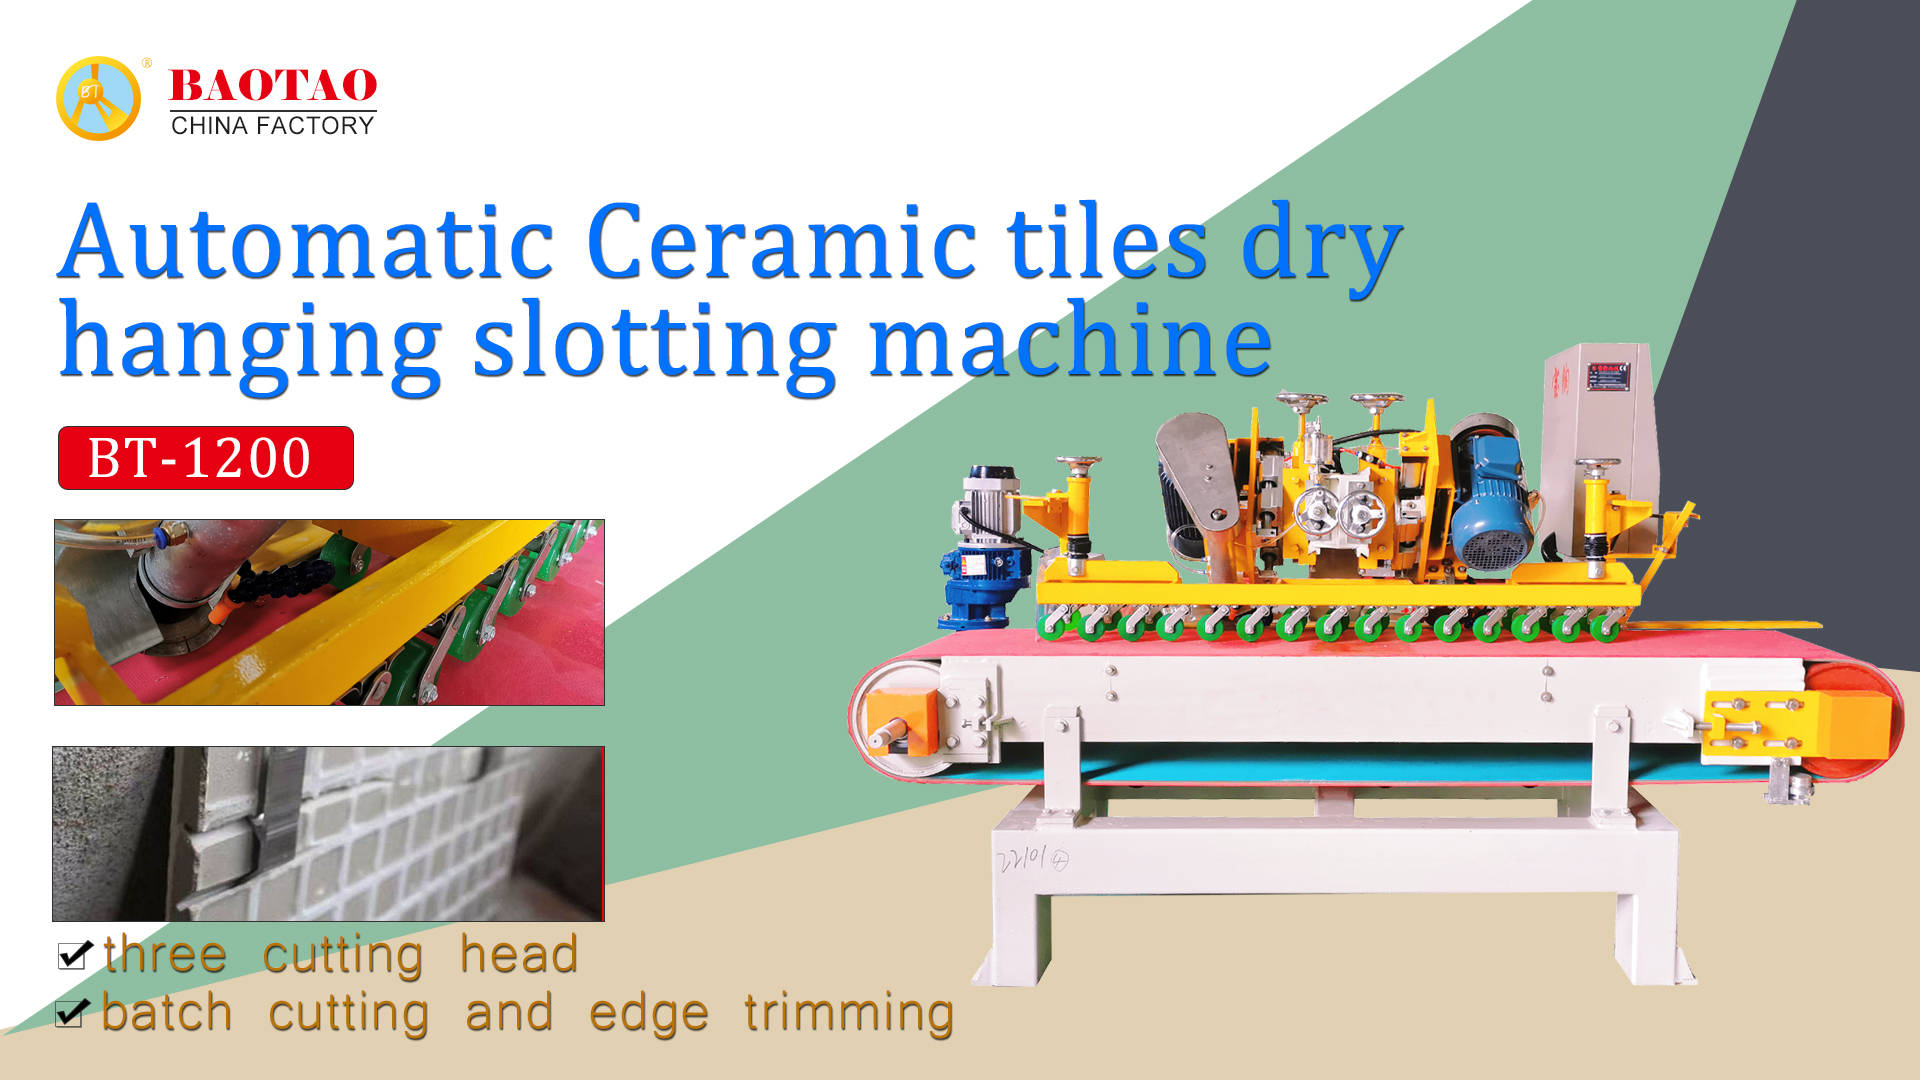 Automatic Ceramic tiles dry hanging slotting machine